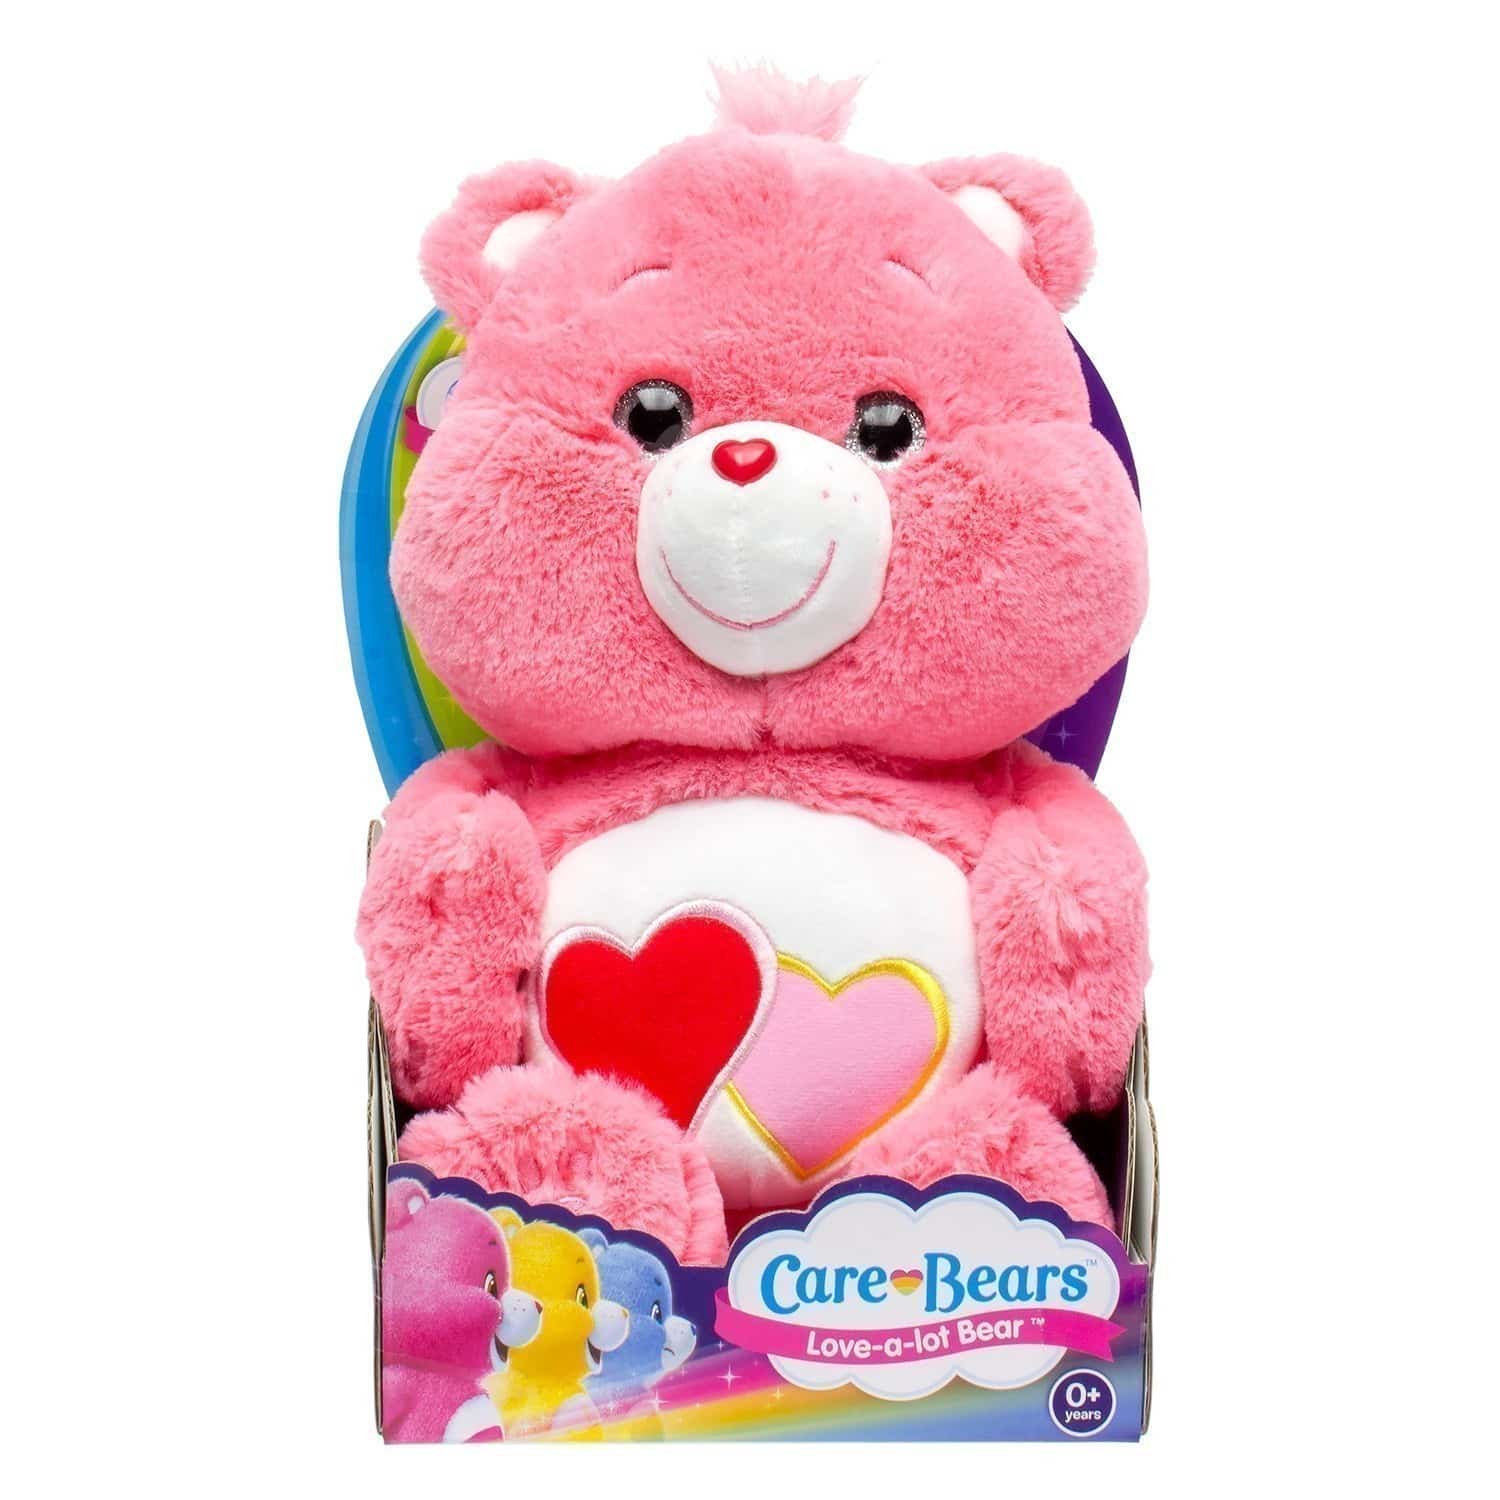 Care Bears - Classic Plush Love-a-Lot Bear